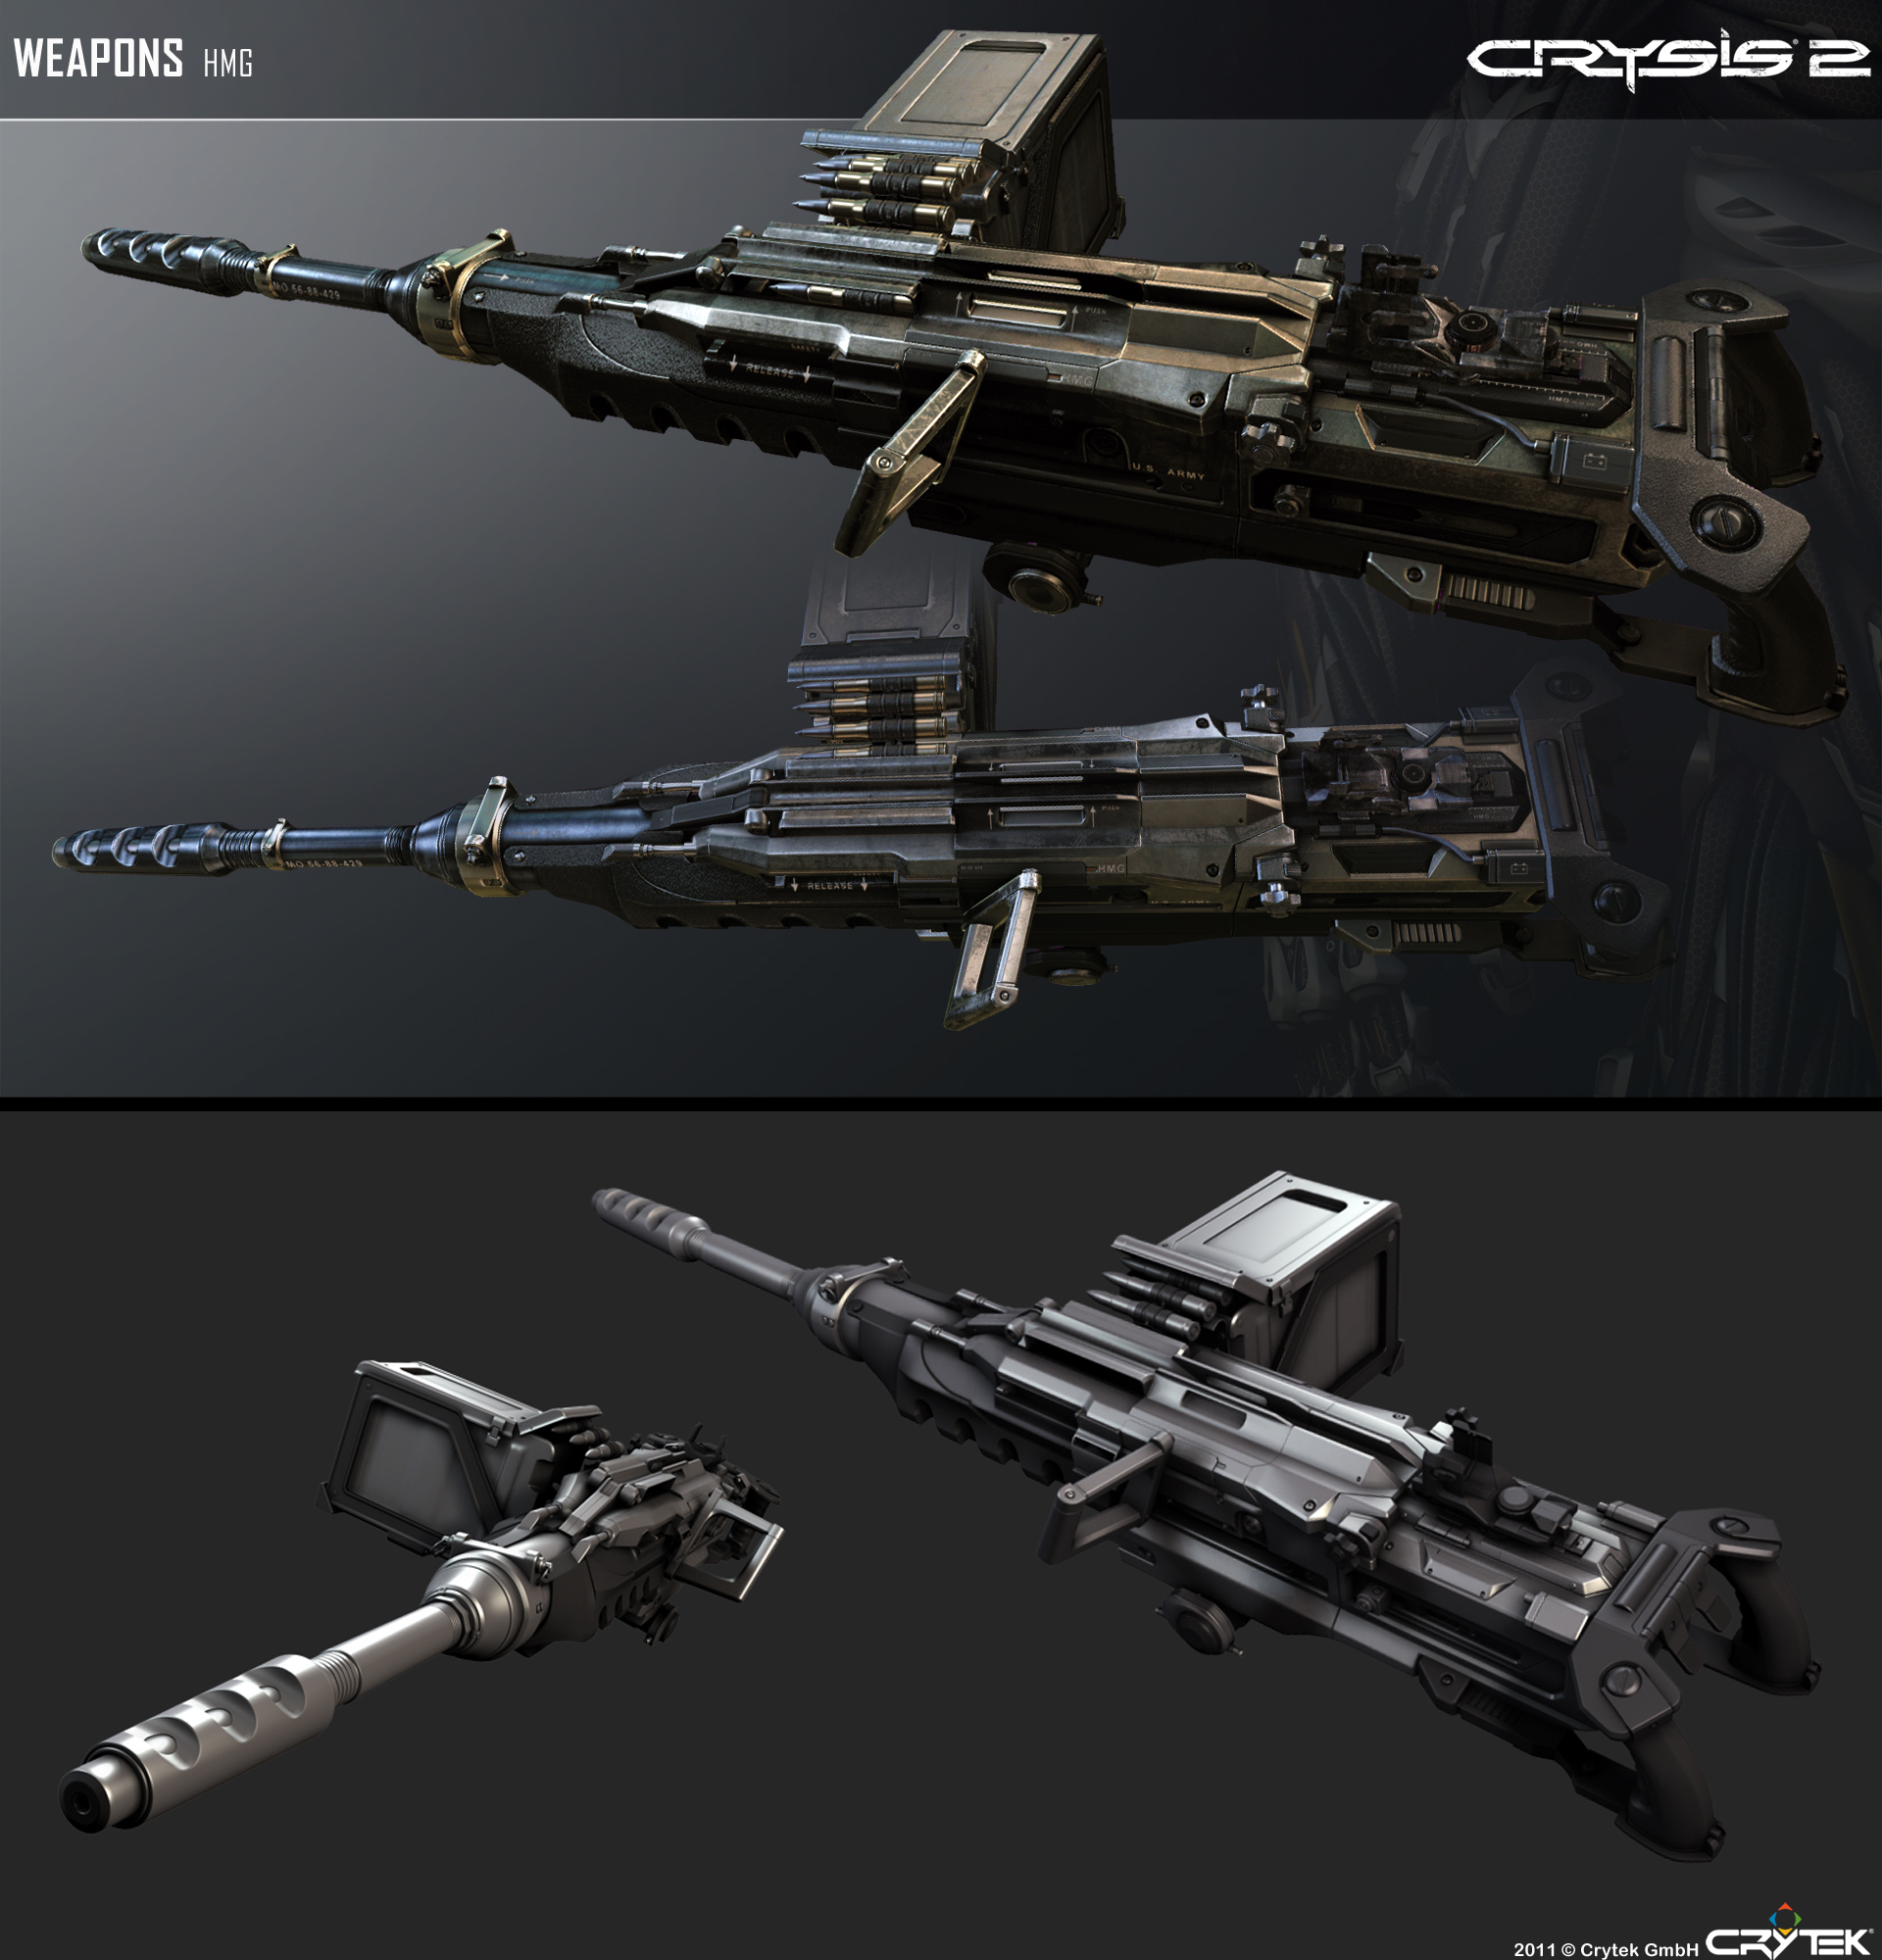 Crysis оружие. Крайзис 2 оружие. Crysis 2 Weapons. Кризис 2 оружие пулемет. Крайзис 2 винтовка.